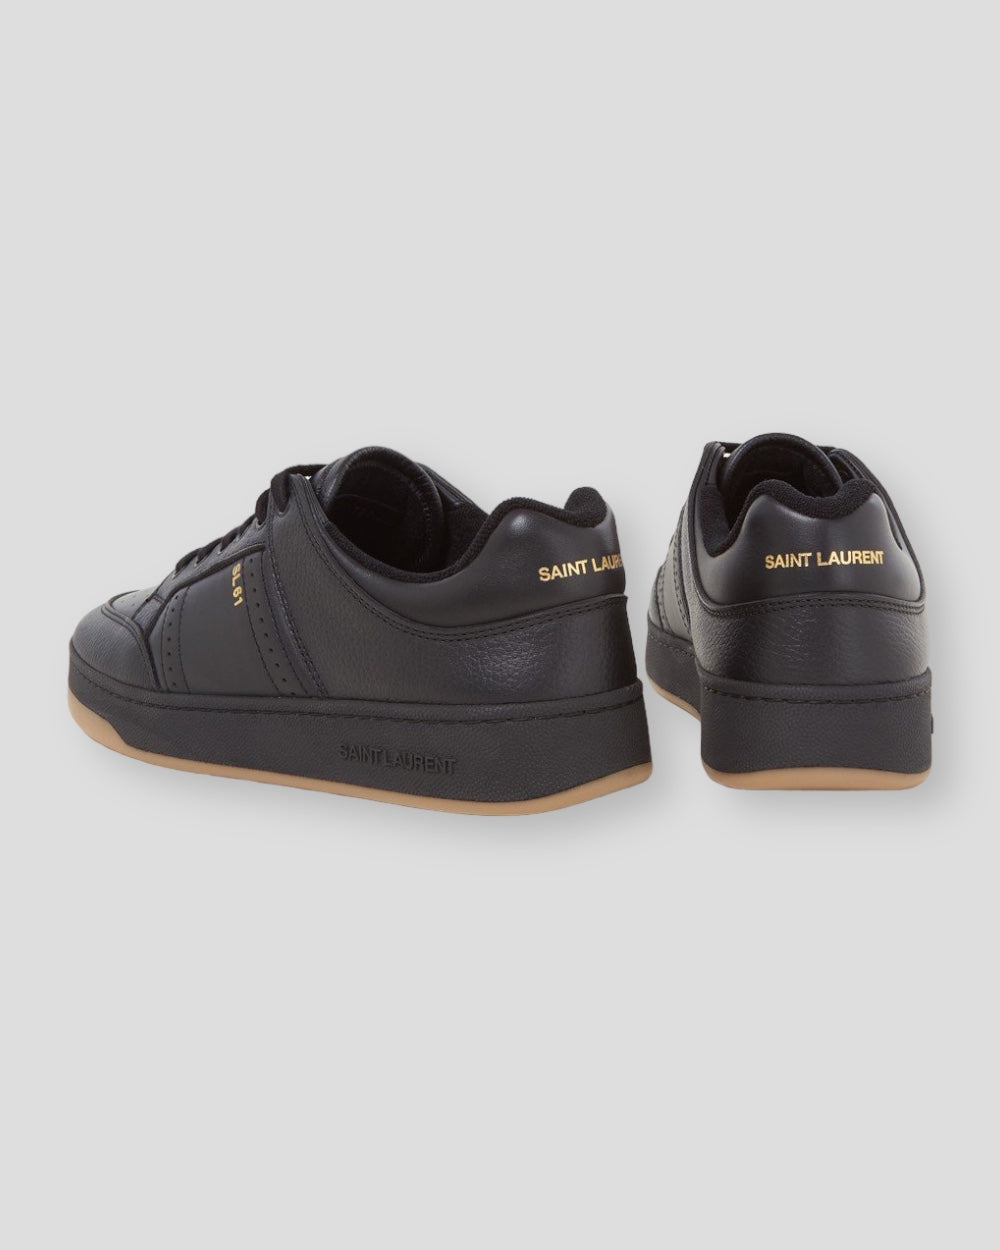 Saint Laurent Black Calf Leather Low Top Sneakers